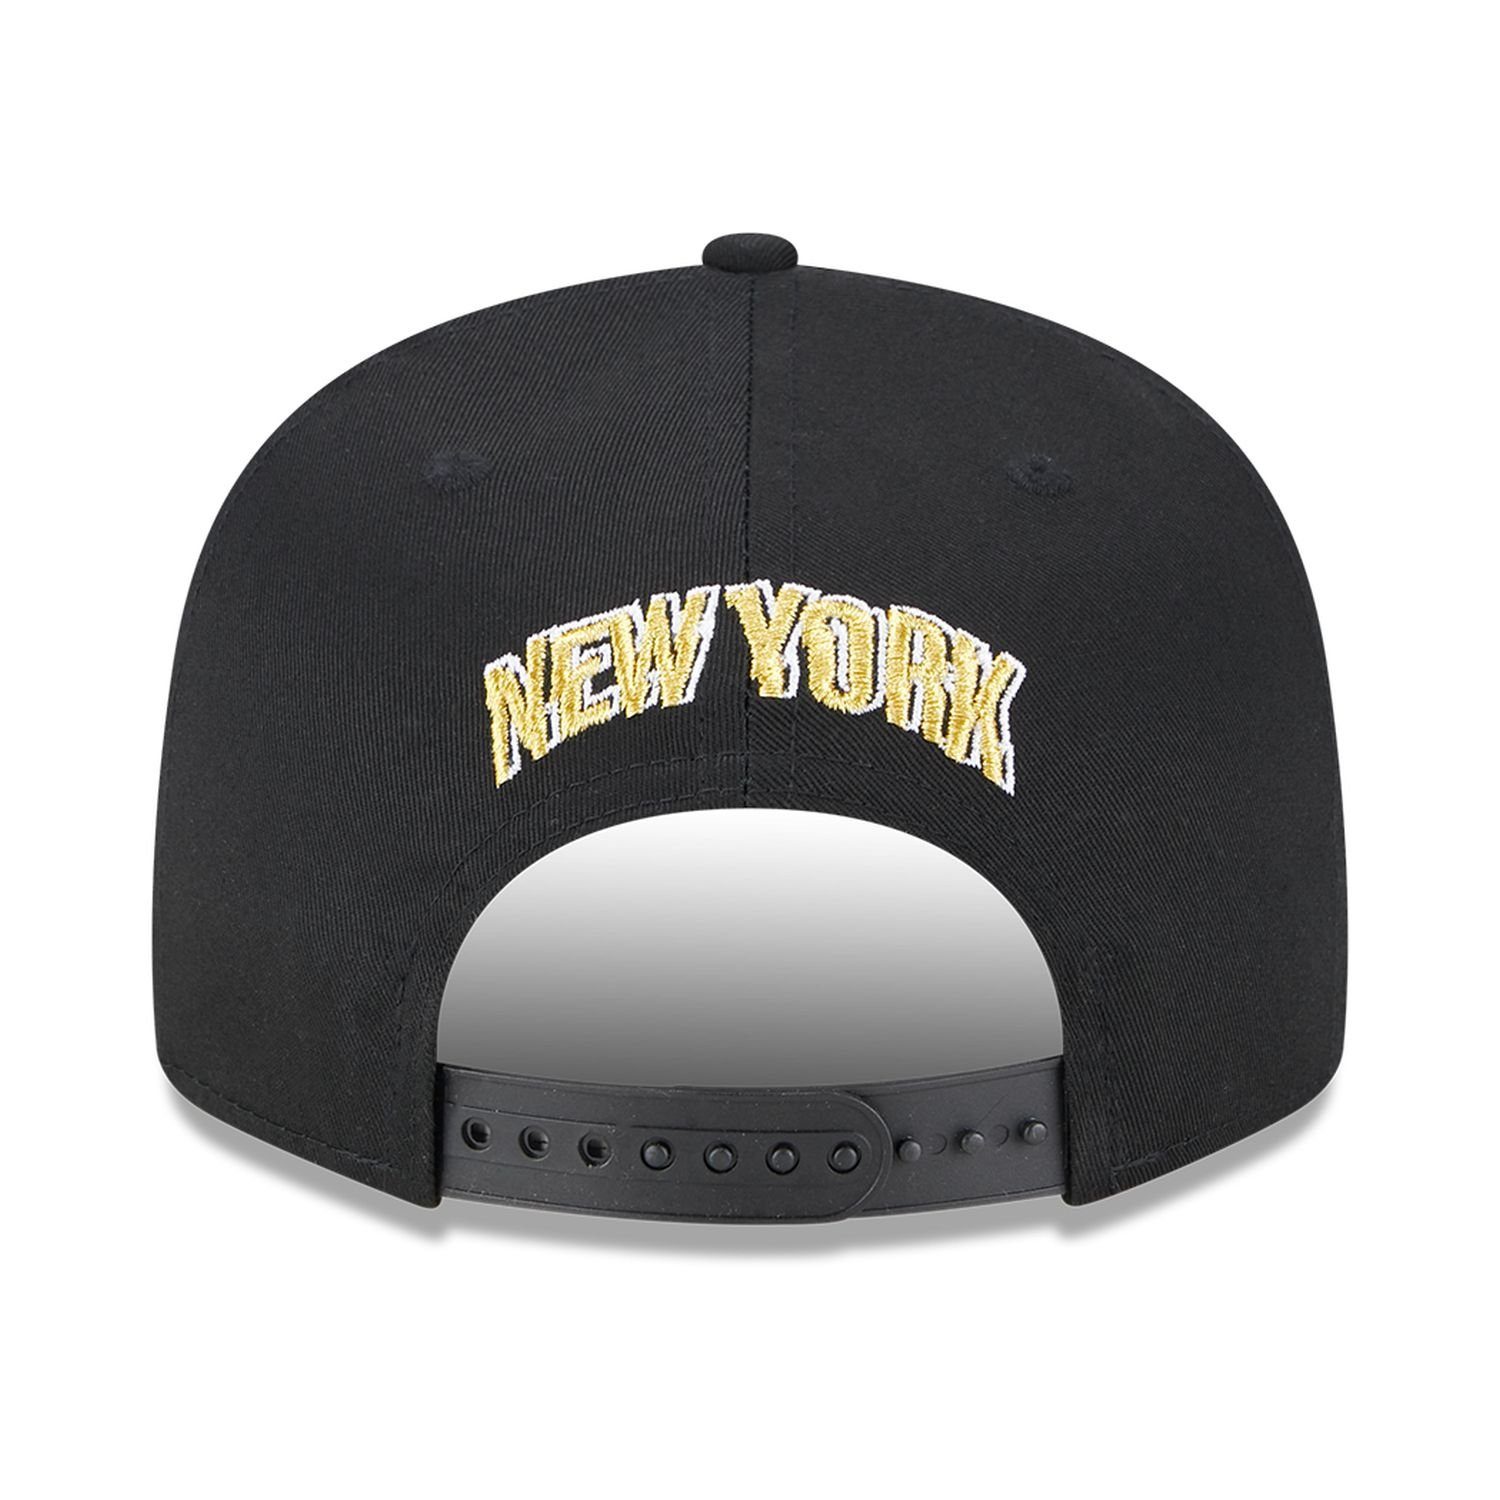 Yankees Cap Era New New 9Fifty Snapback York METALLIC